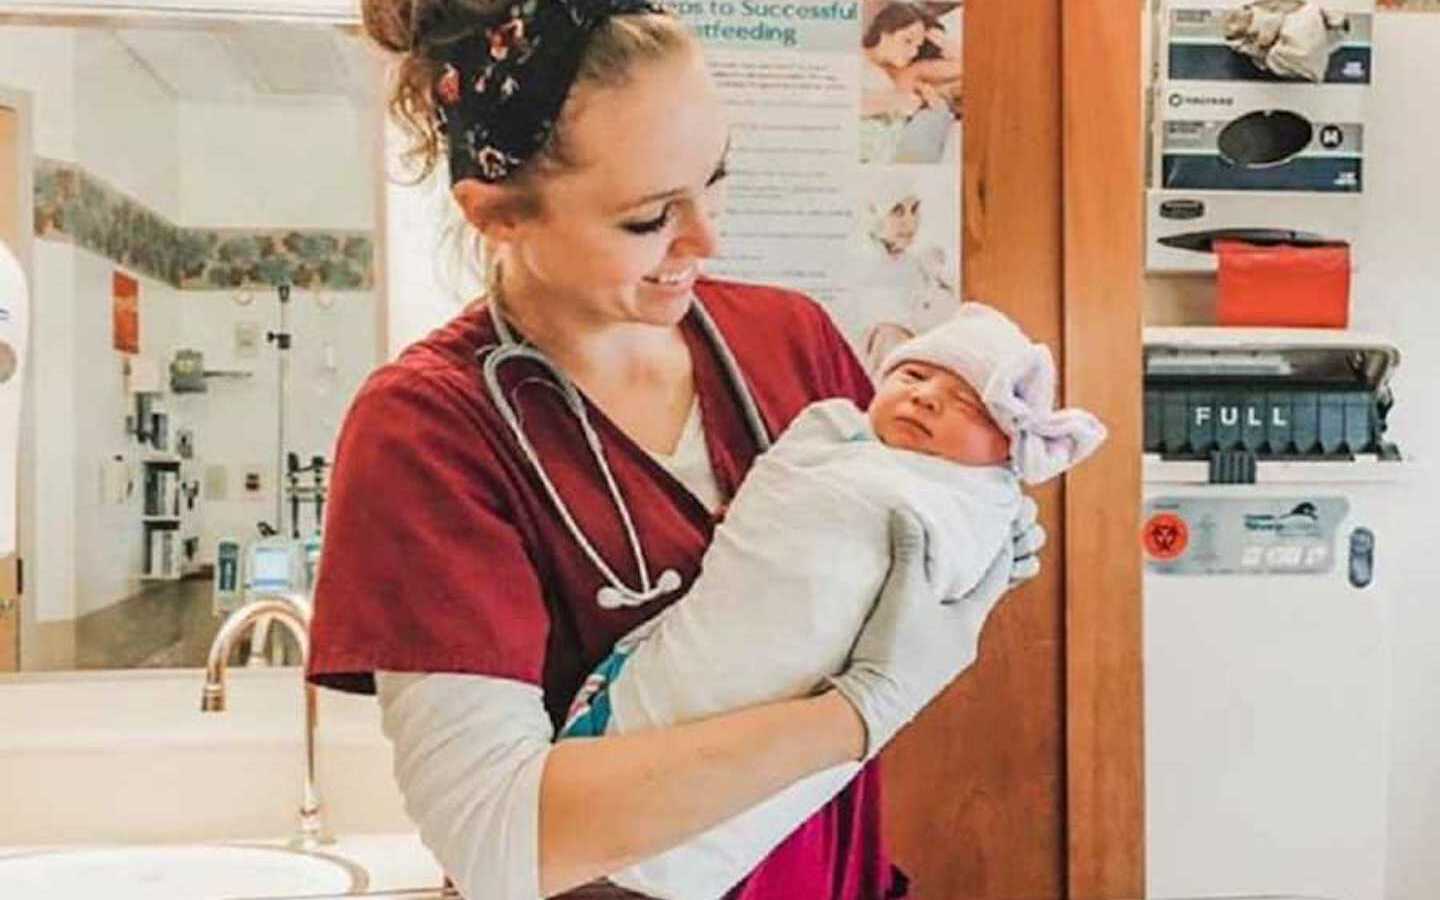 OB nurse holding baby in hospital